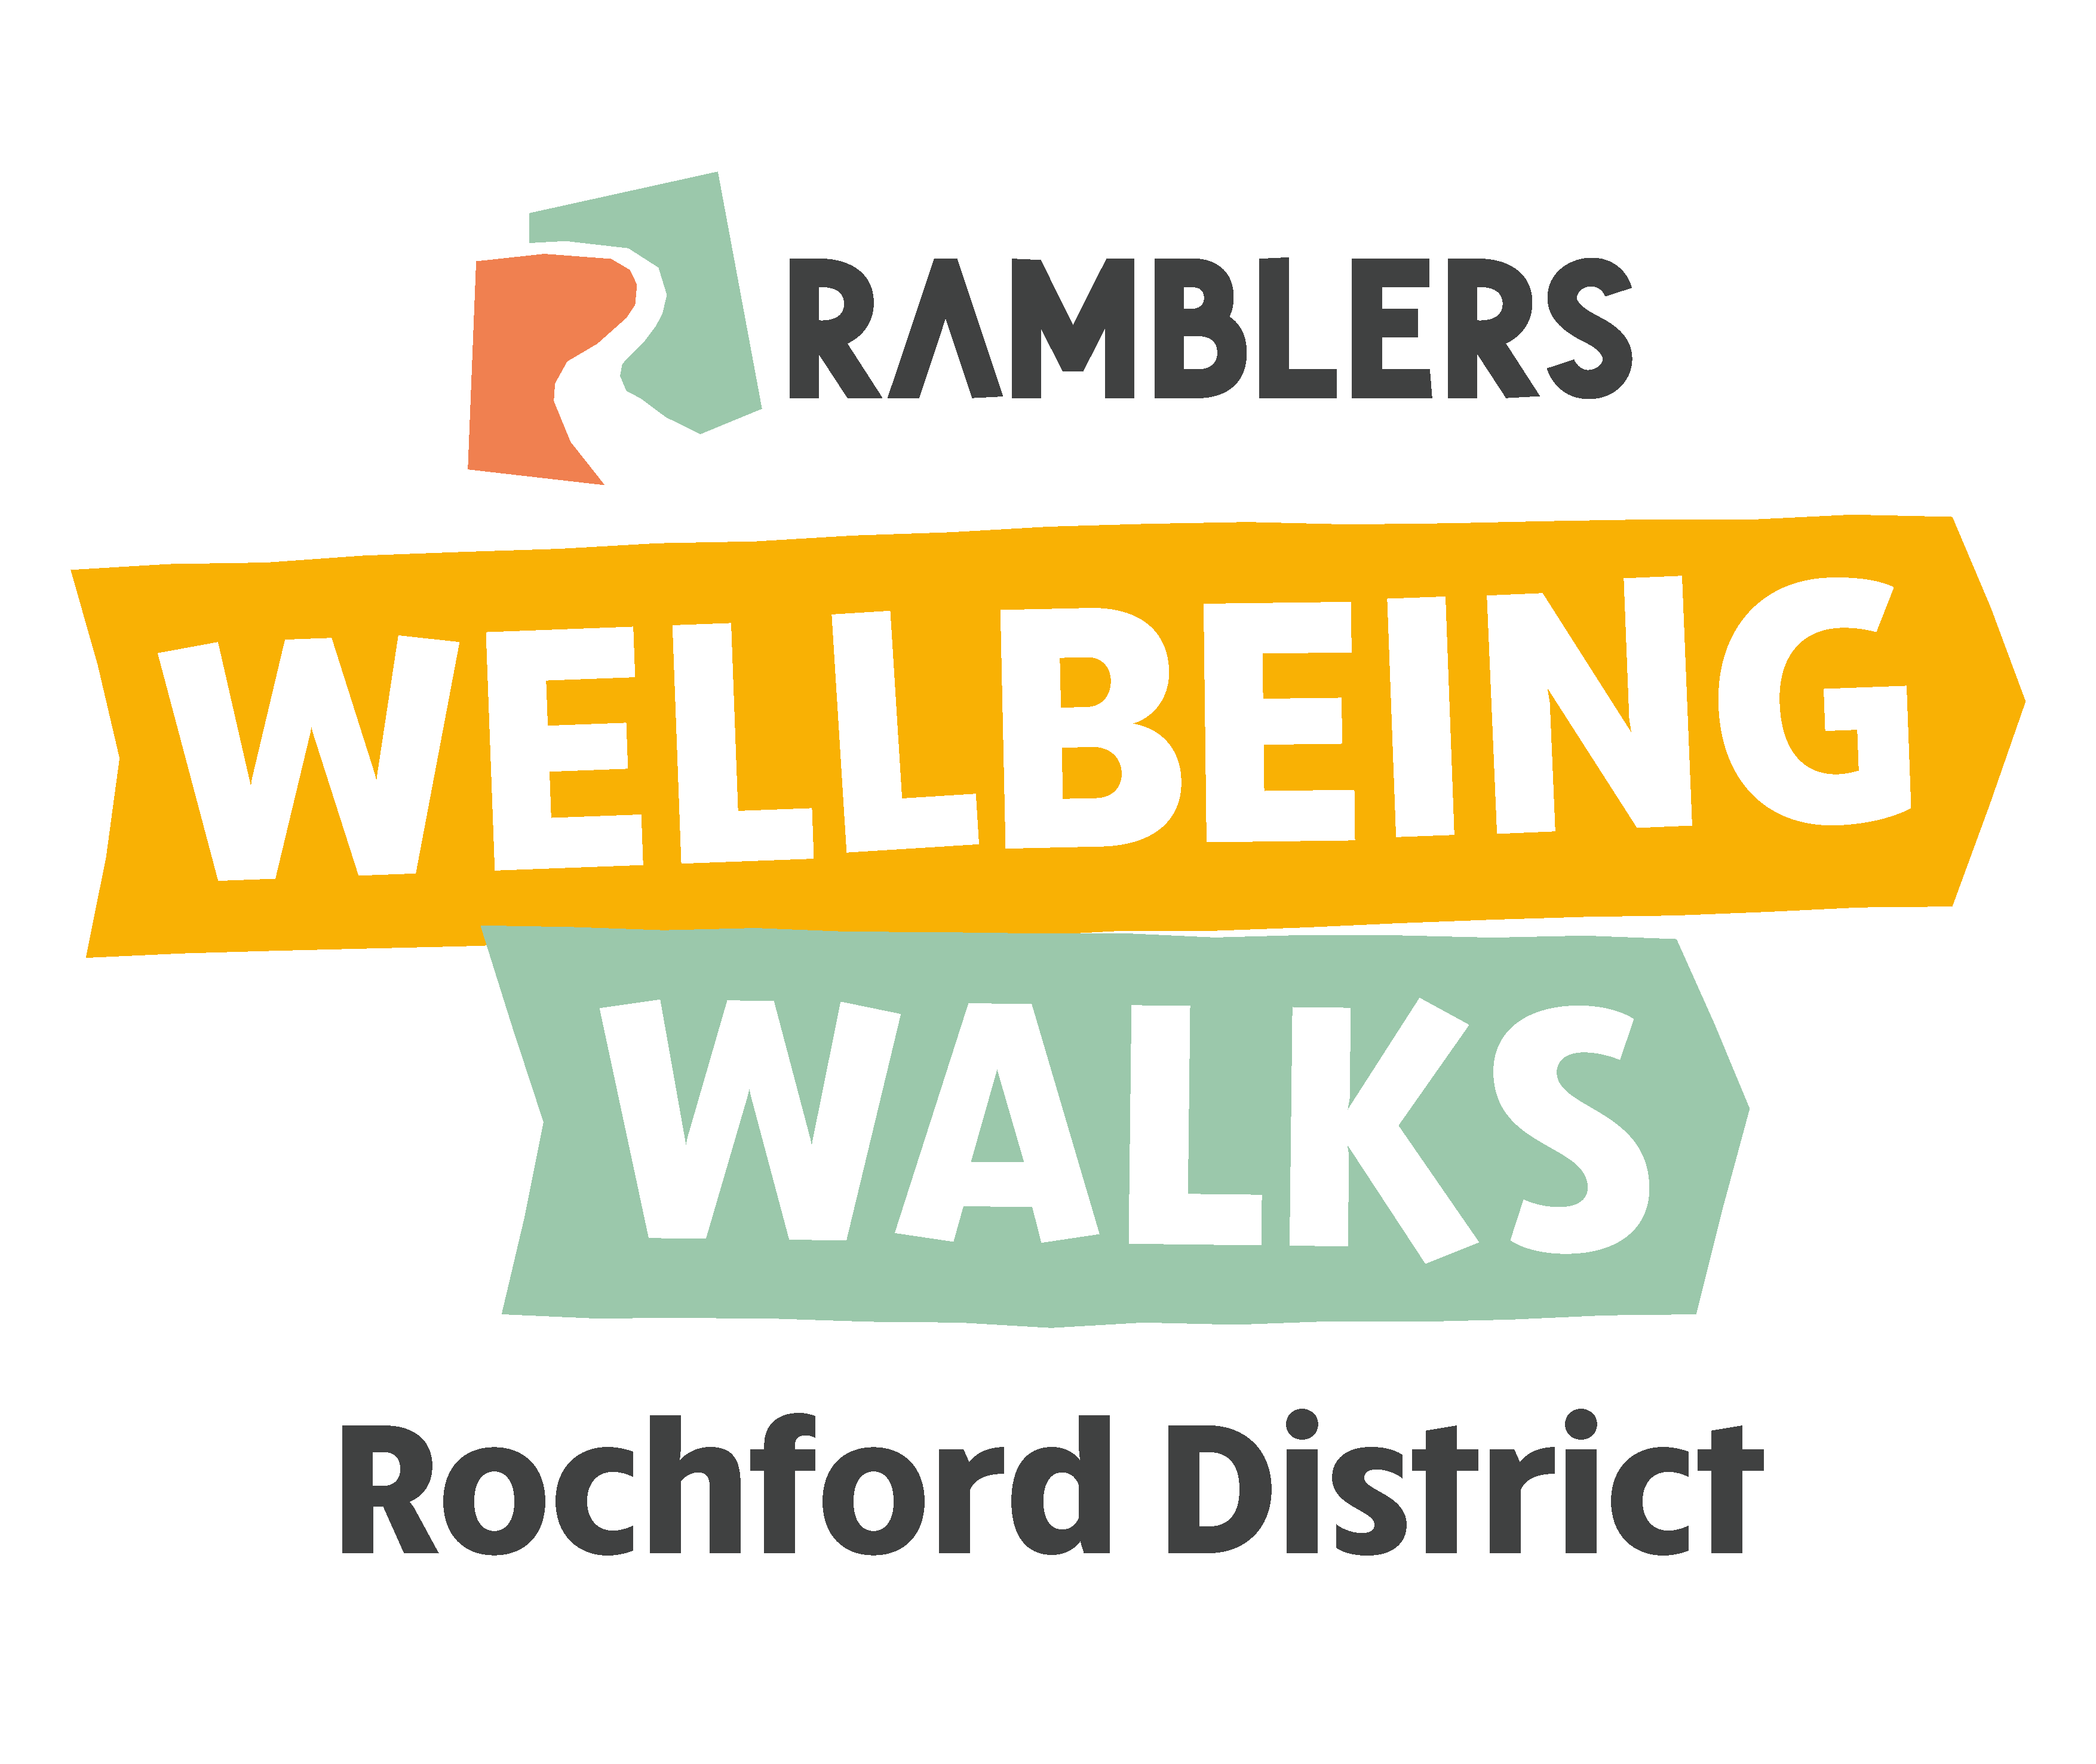 Ramblers Wellbeing Walks Rochford District